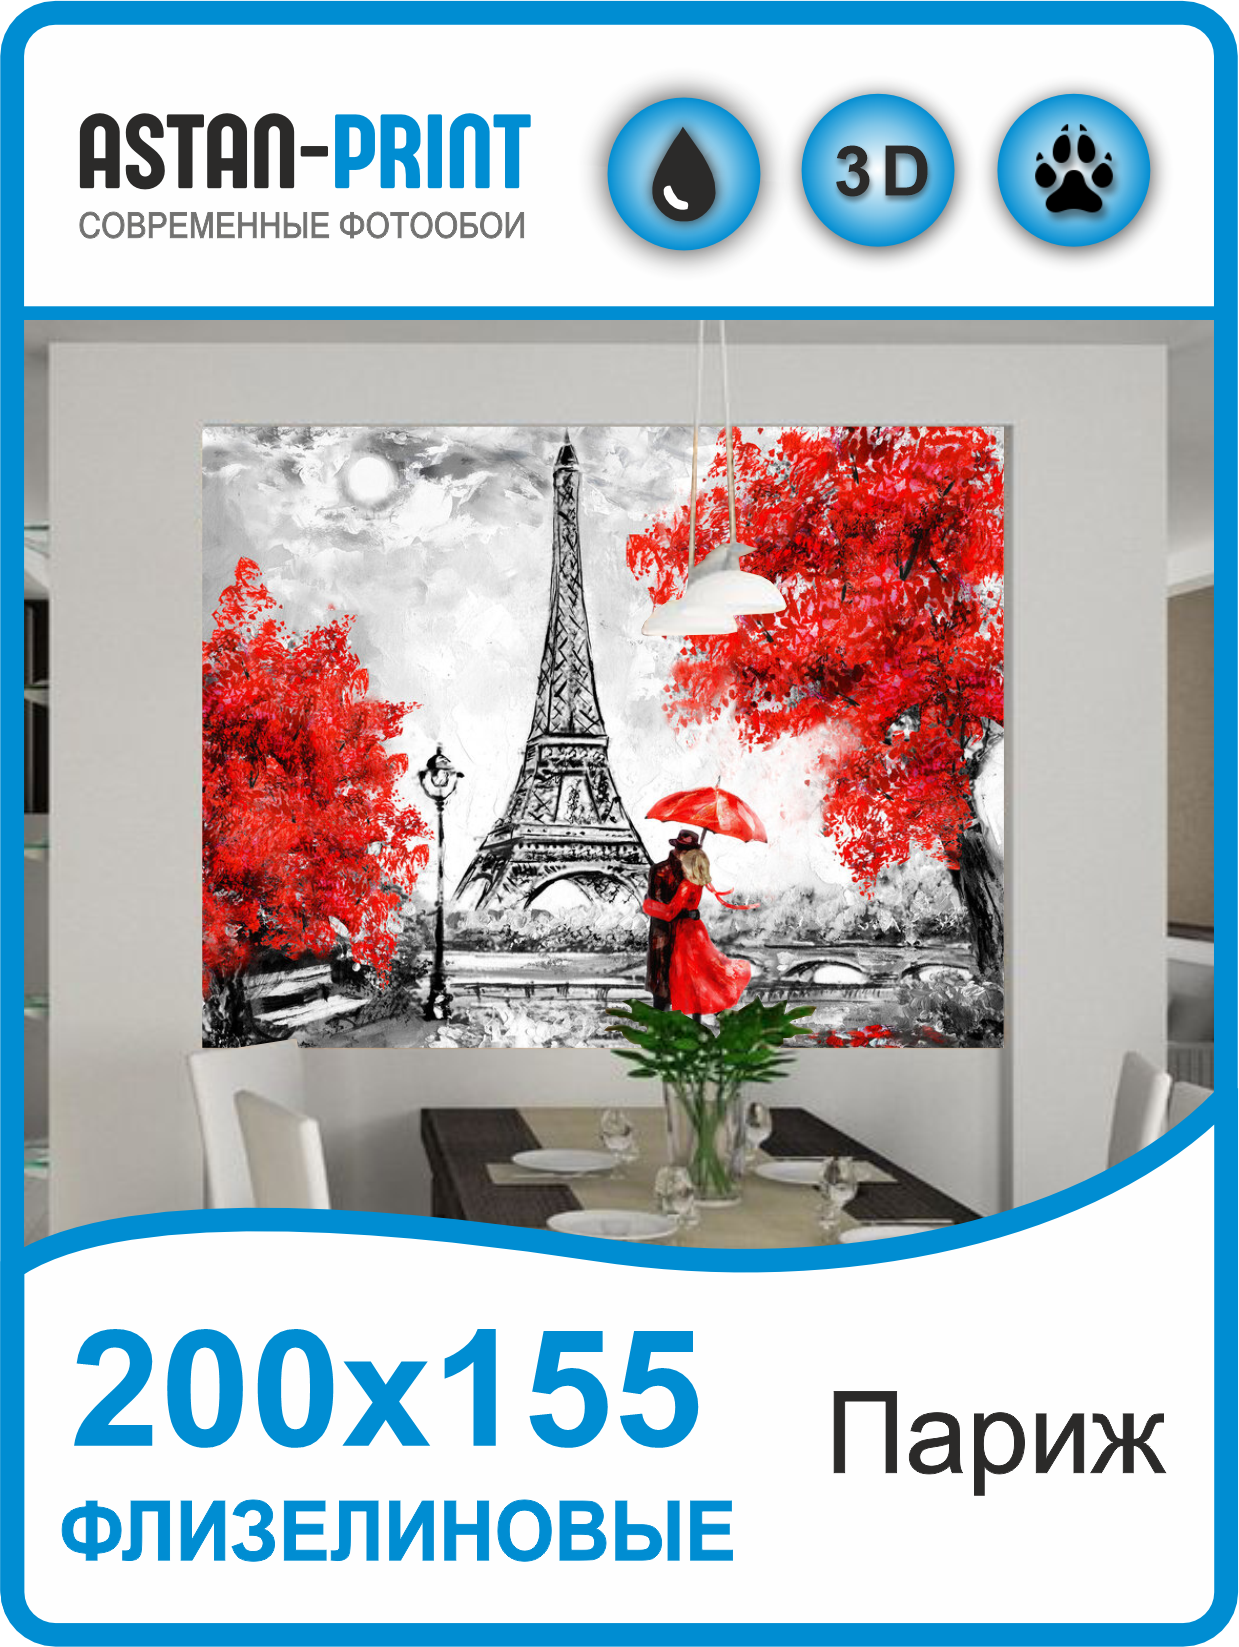 Фотообои для кухни Astan Улицы города Париж 200х155 флизелиновые фотообои улицы города париж 300х270